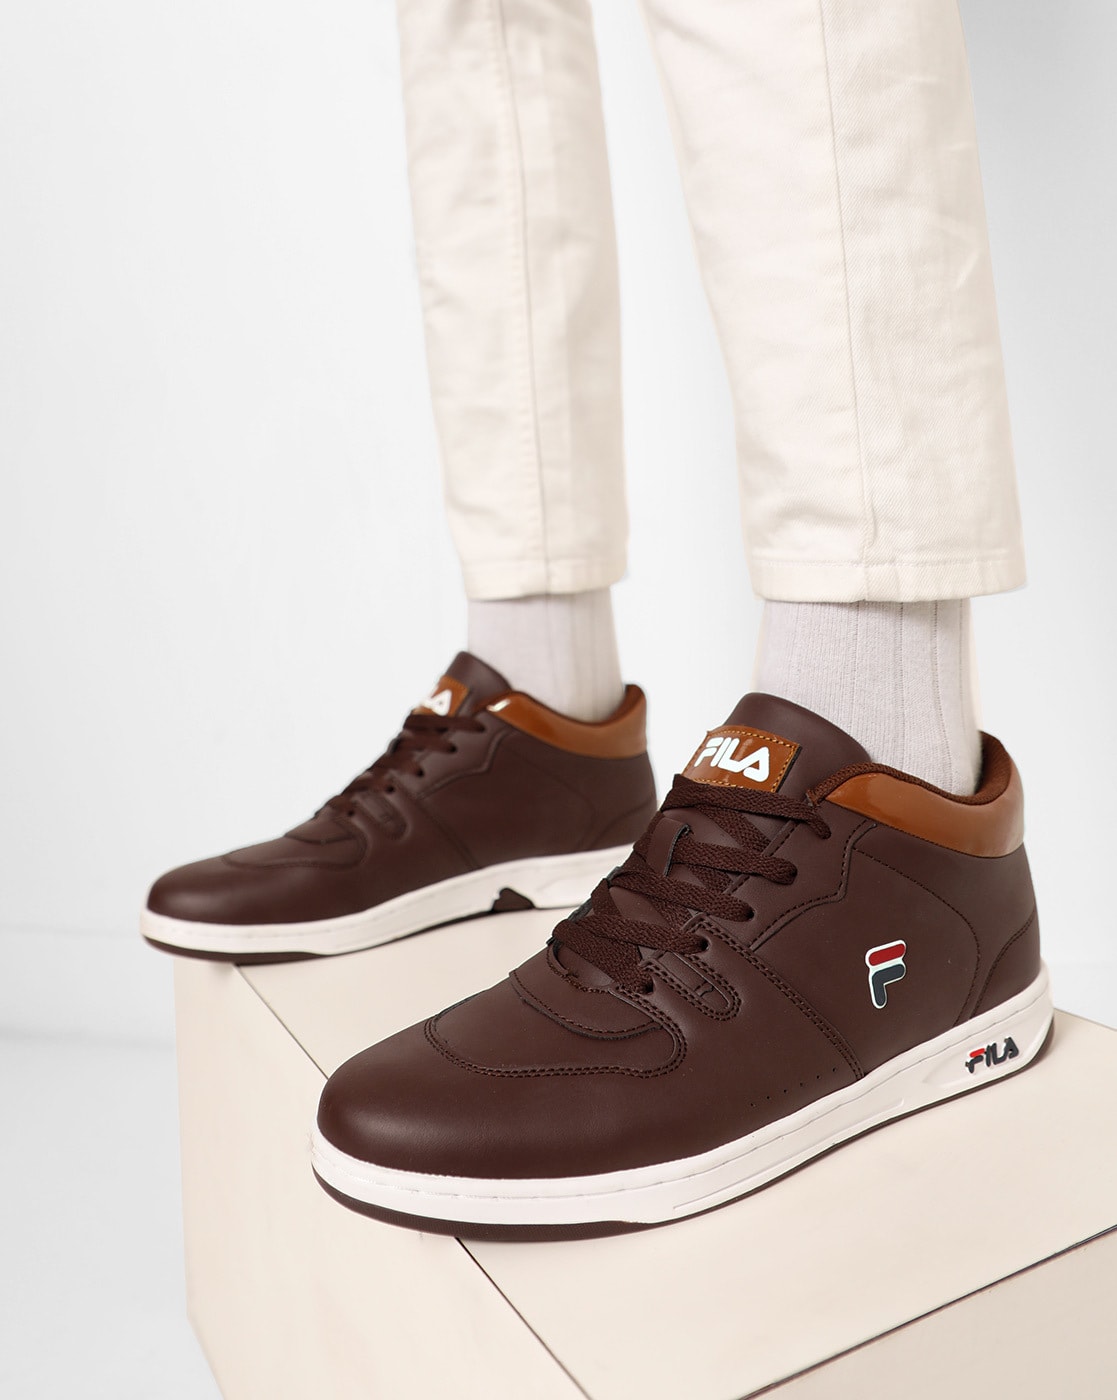 Fila Brown Shoes | vlr.eng.br